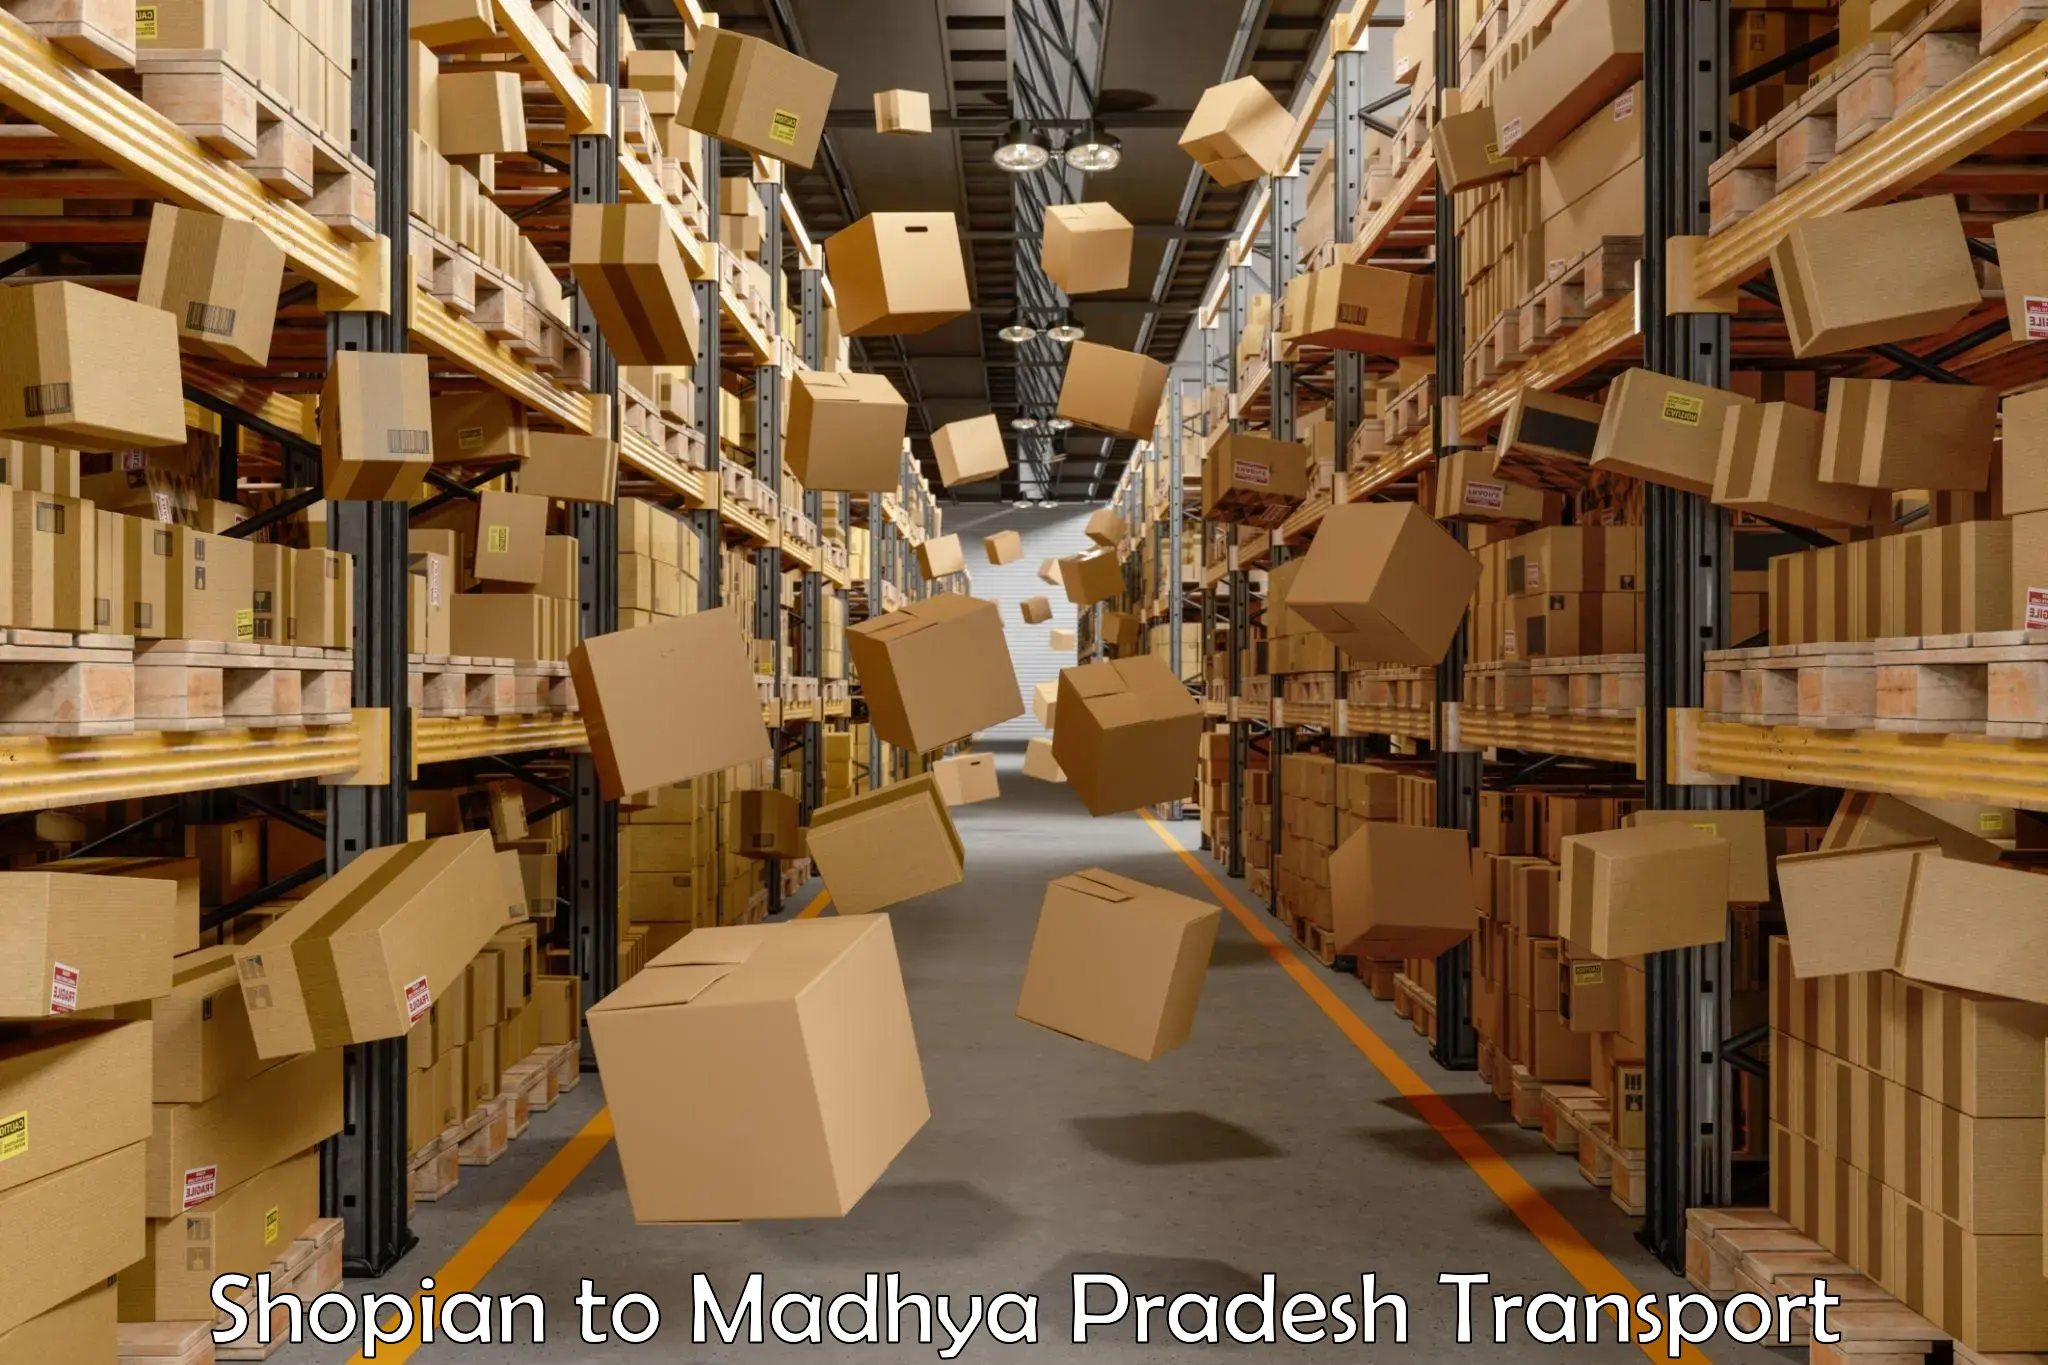 Furniture transport service Shopian to Madhya Pradesh